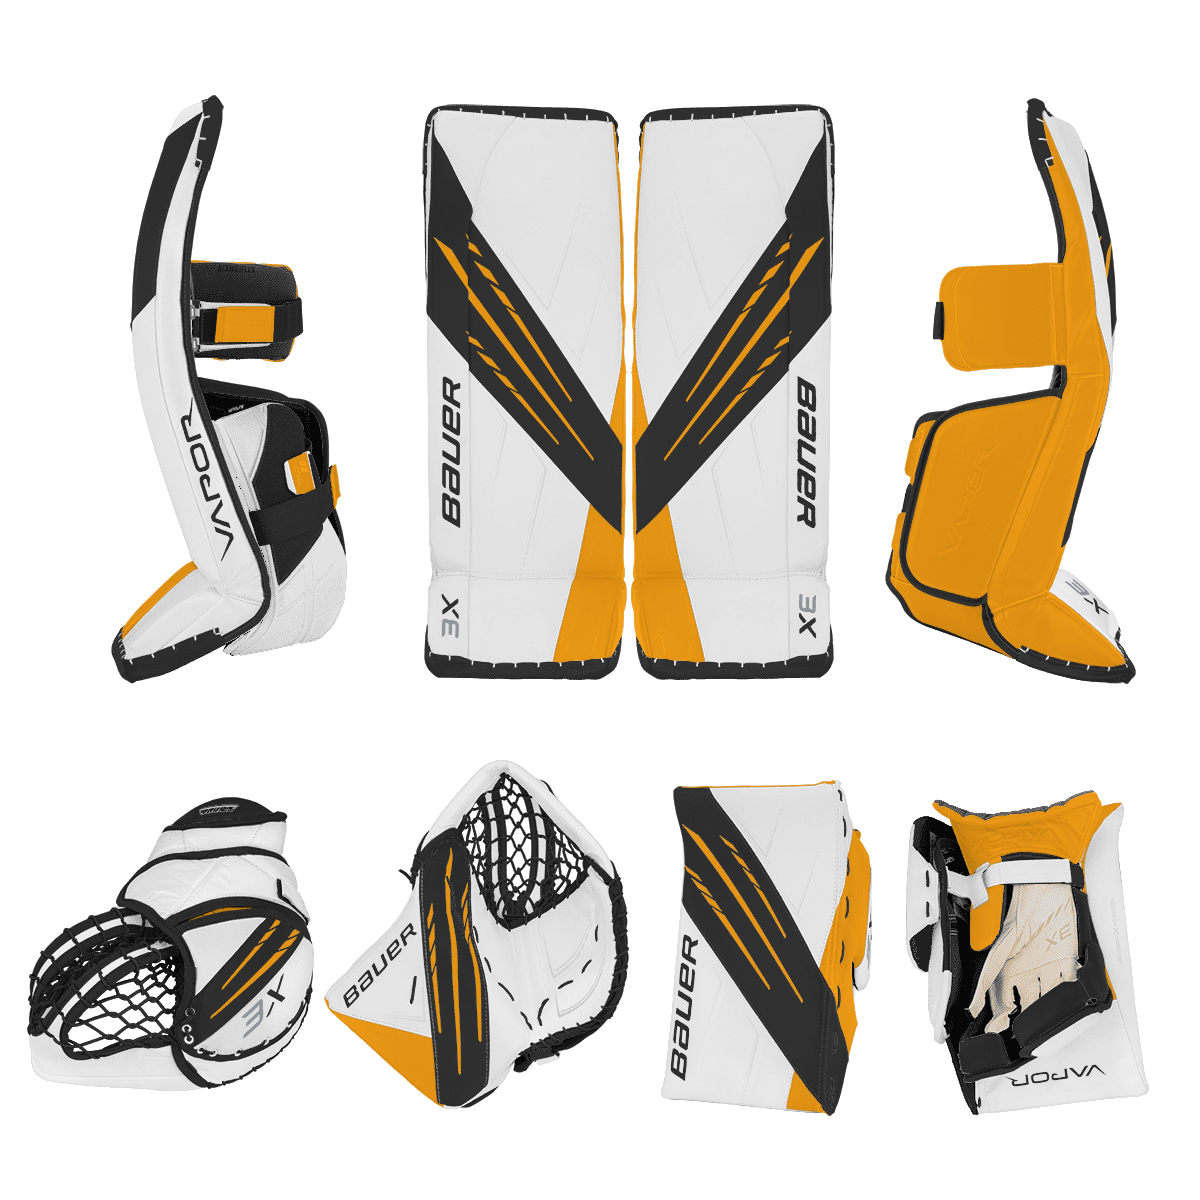 Bauer Vapor 3X Goalie Equipment - Custom Design - Intermediate Boston Inspiration